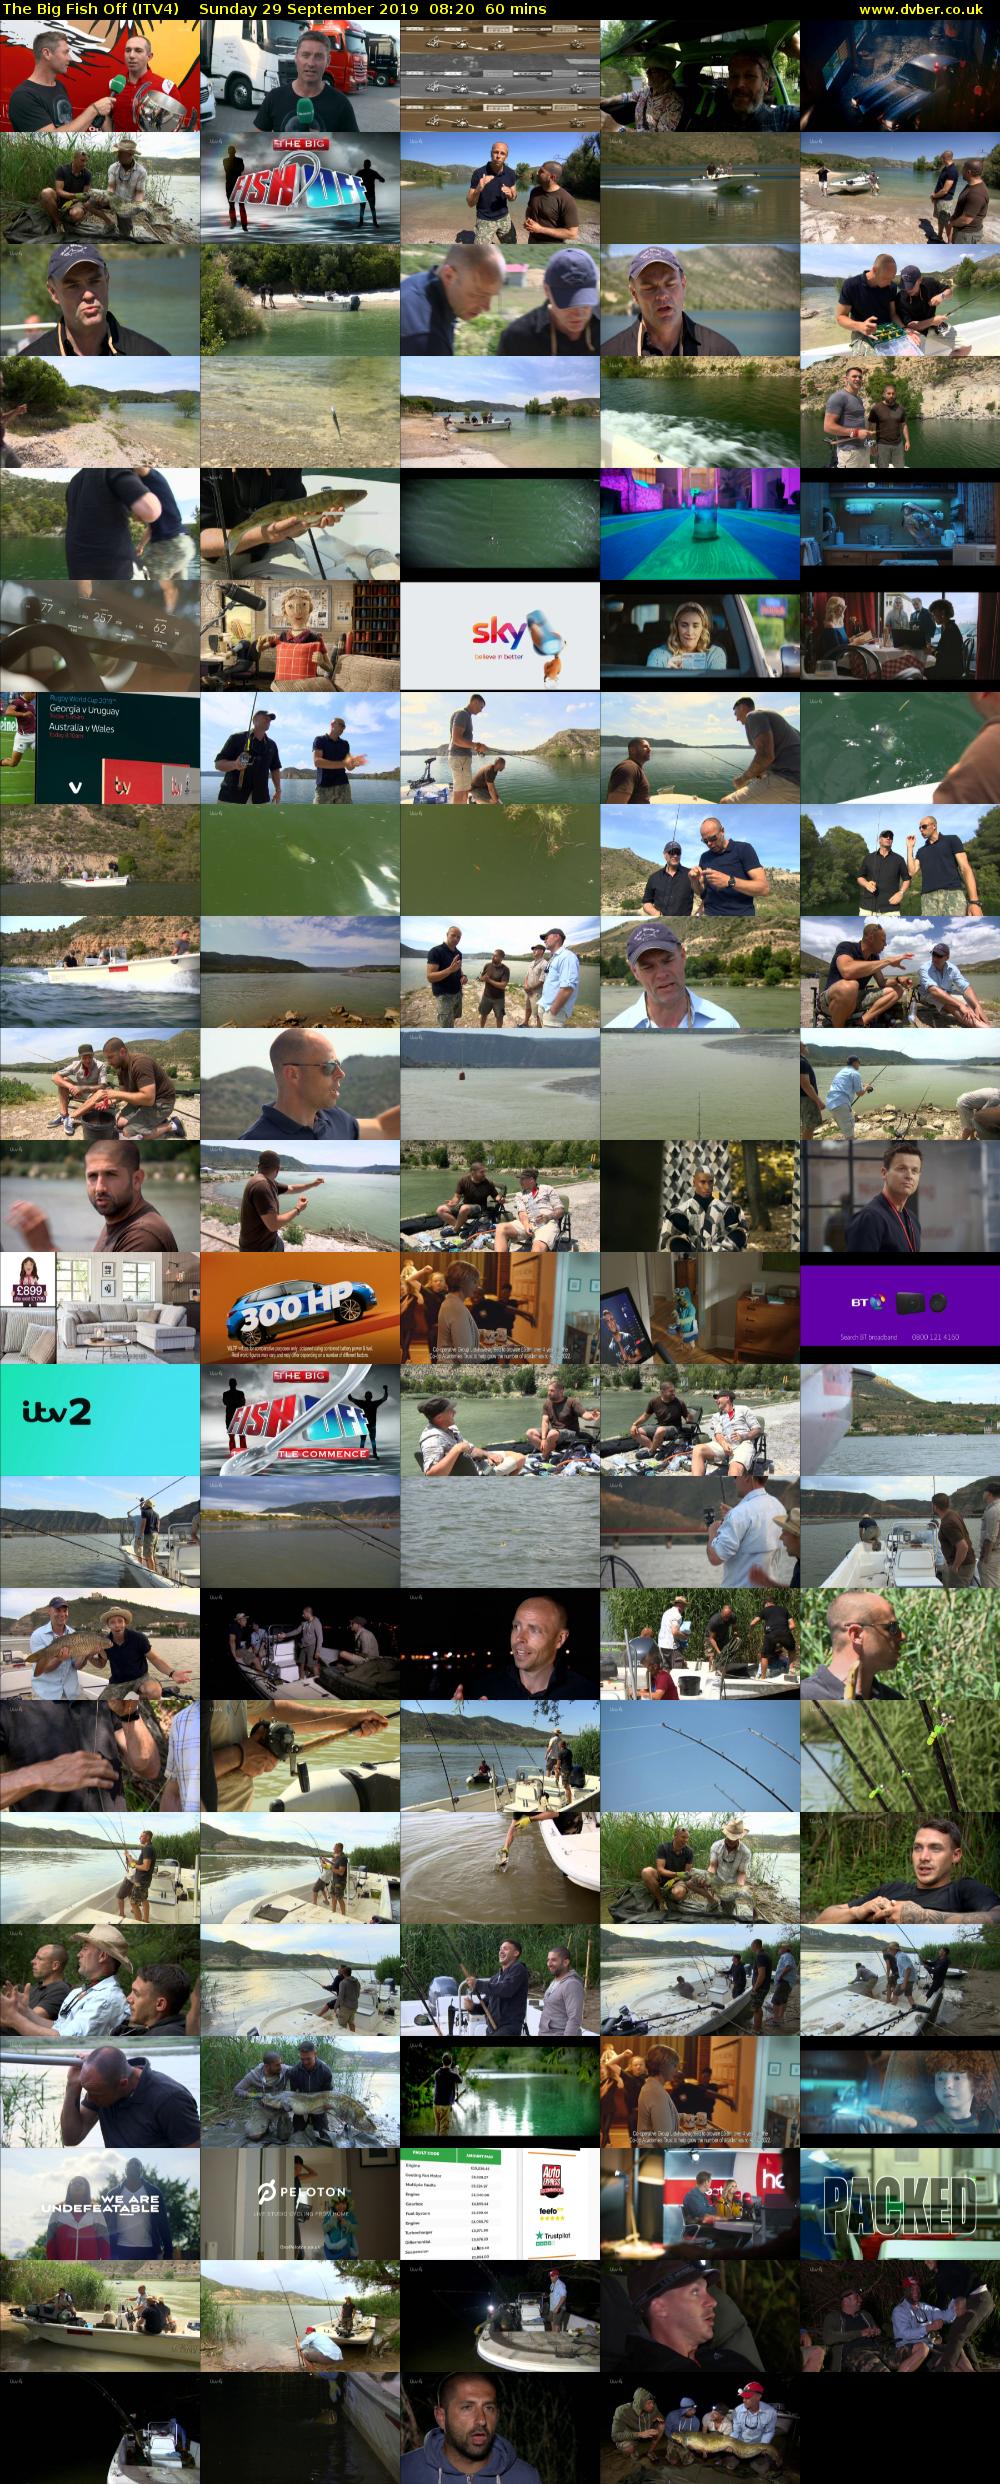 The Big Fish Off (ITV4) Sunday 29 September 2019 08:20 - 09:20